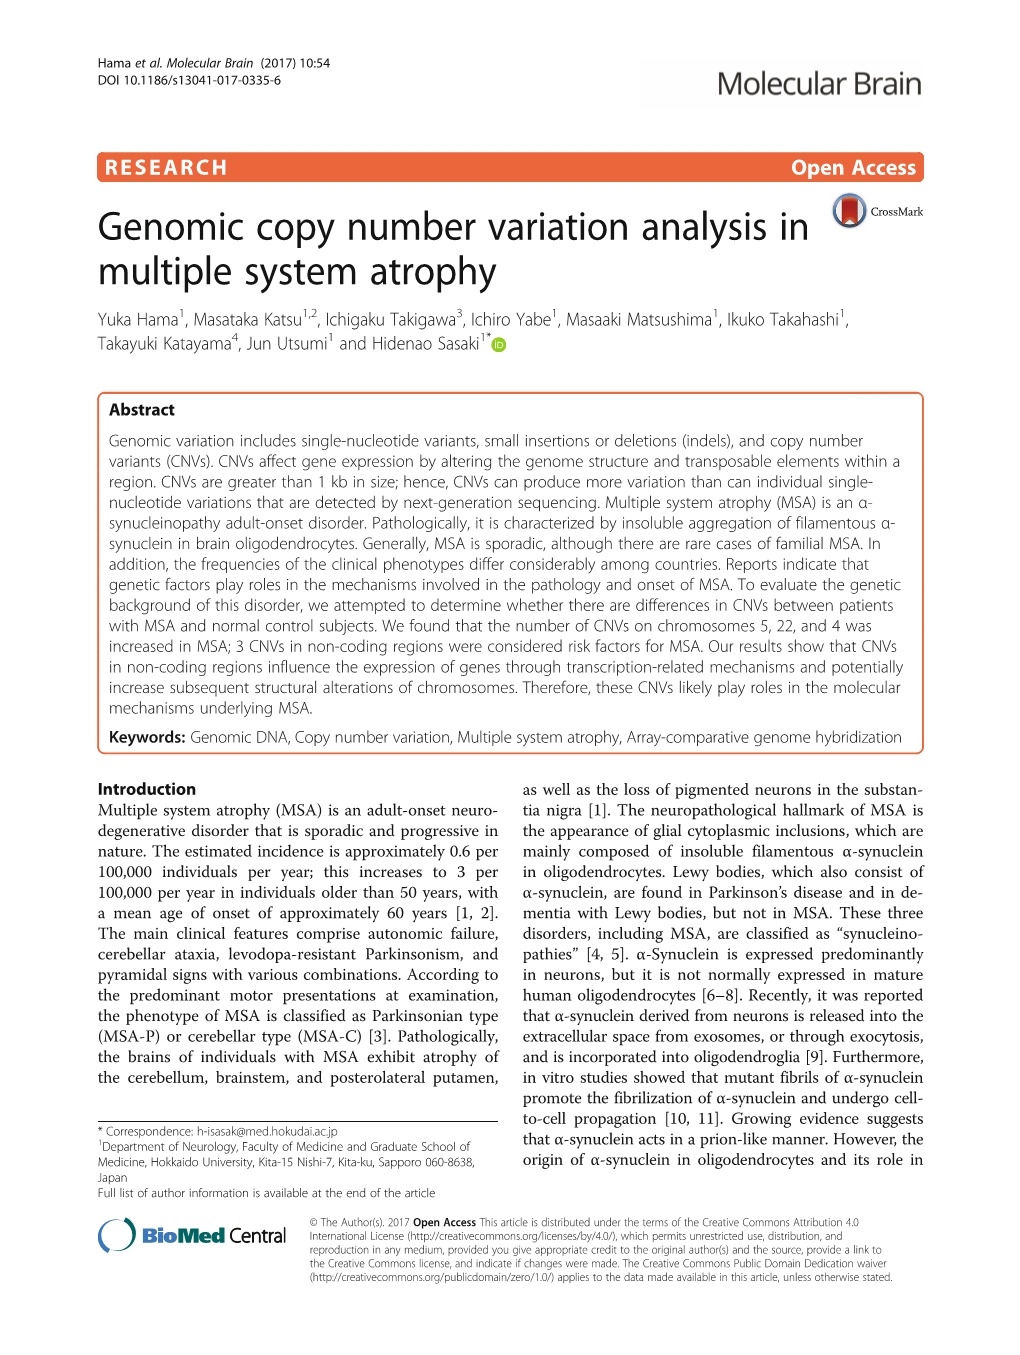 Genomic Copy Number Variation Analysis in Multiple System Atrophy